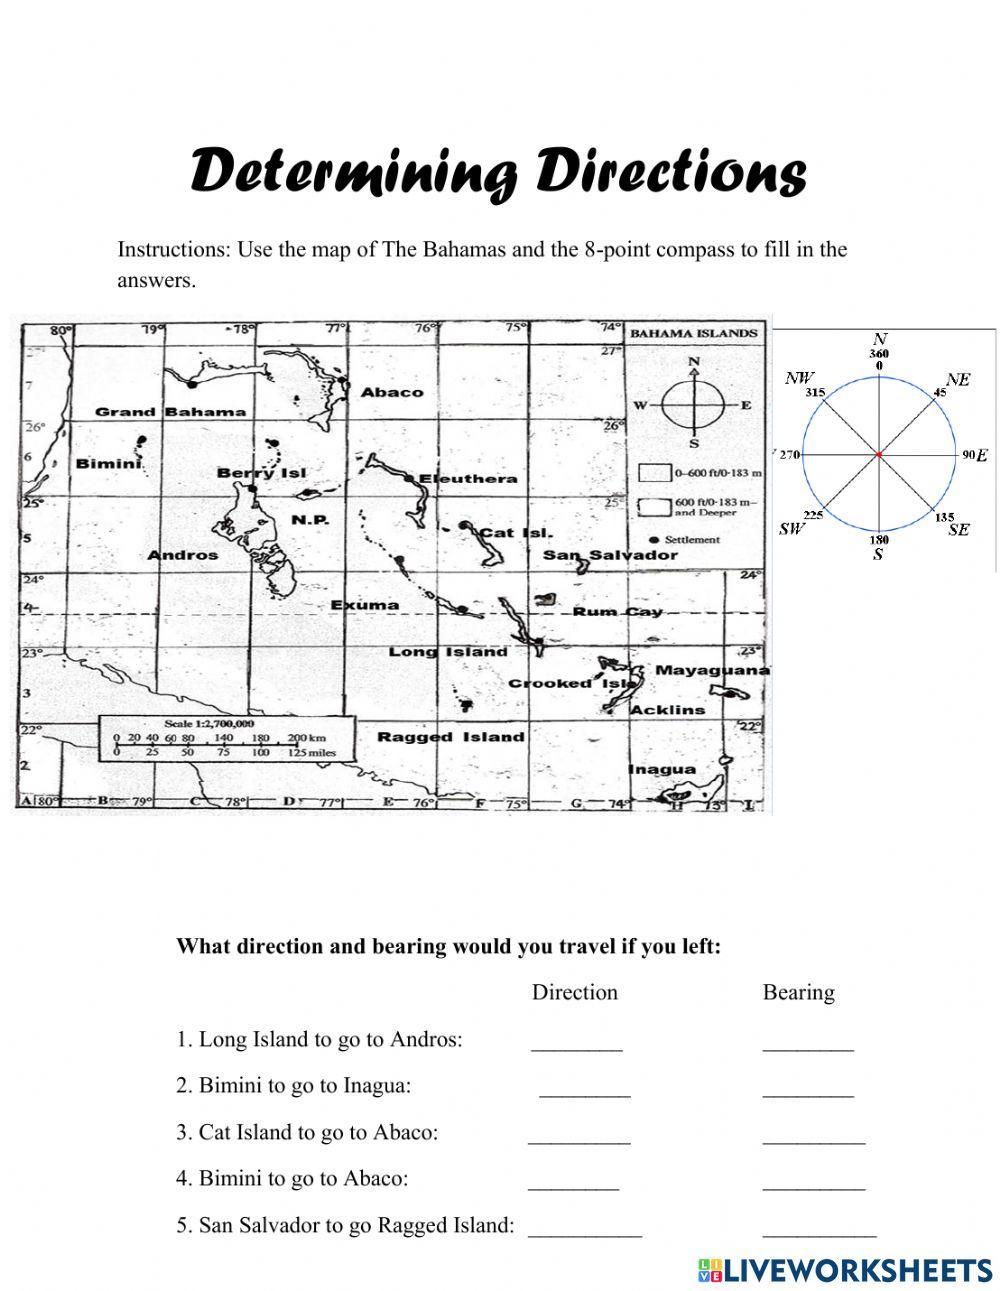 Determining Directions & Bearings